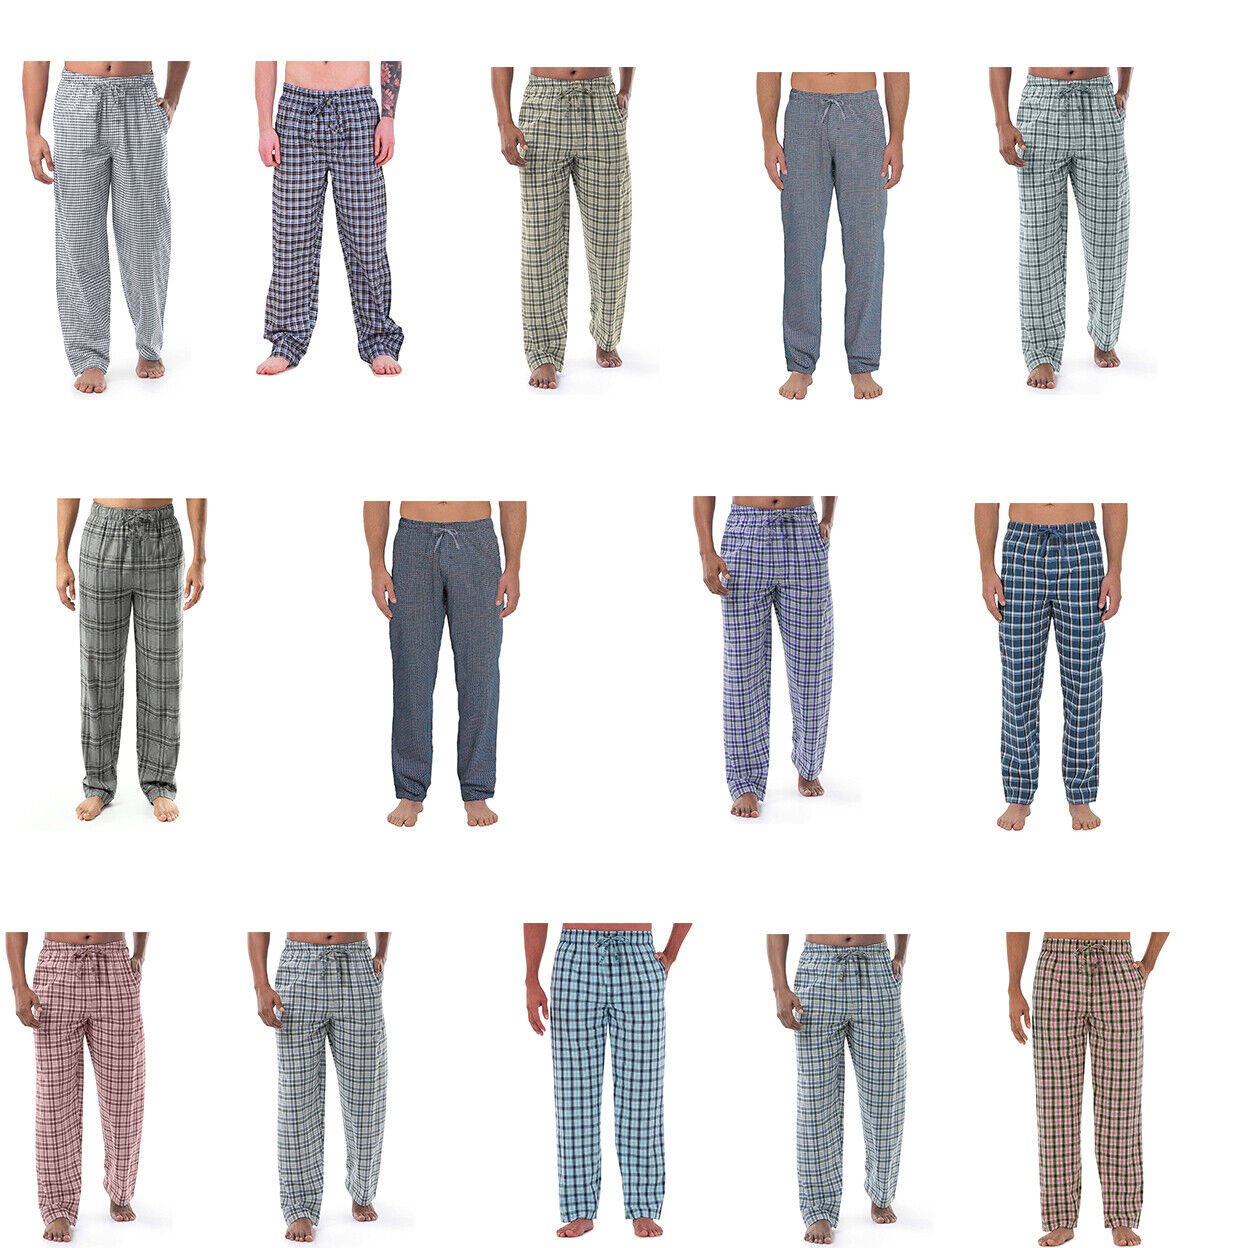 Men's Ultra-Soft Plaid Cotton Jersey Knit Comfy Sleep Lounge Pajama Pants - Black, Medium